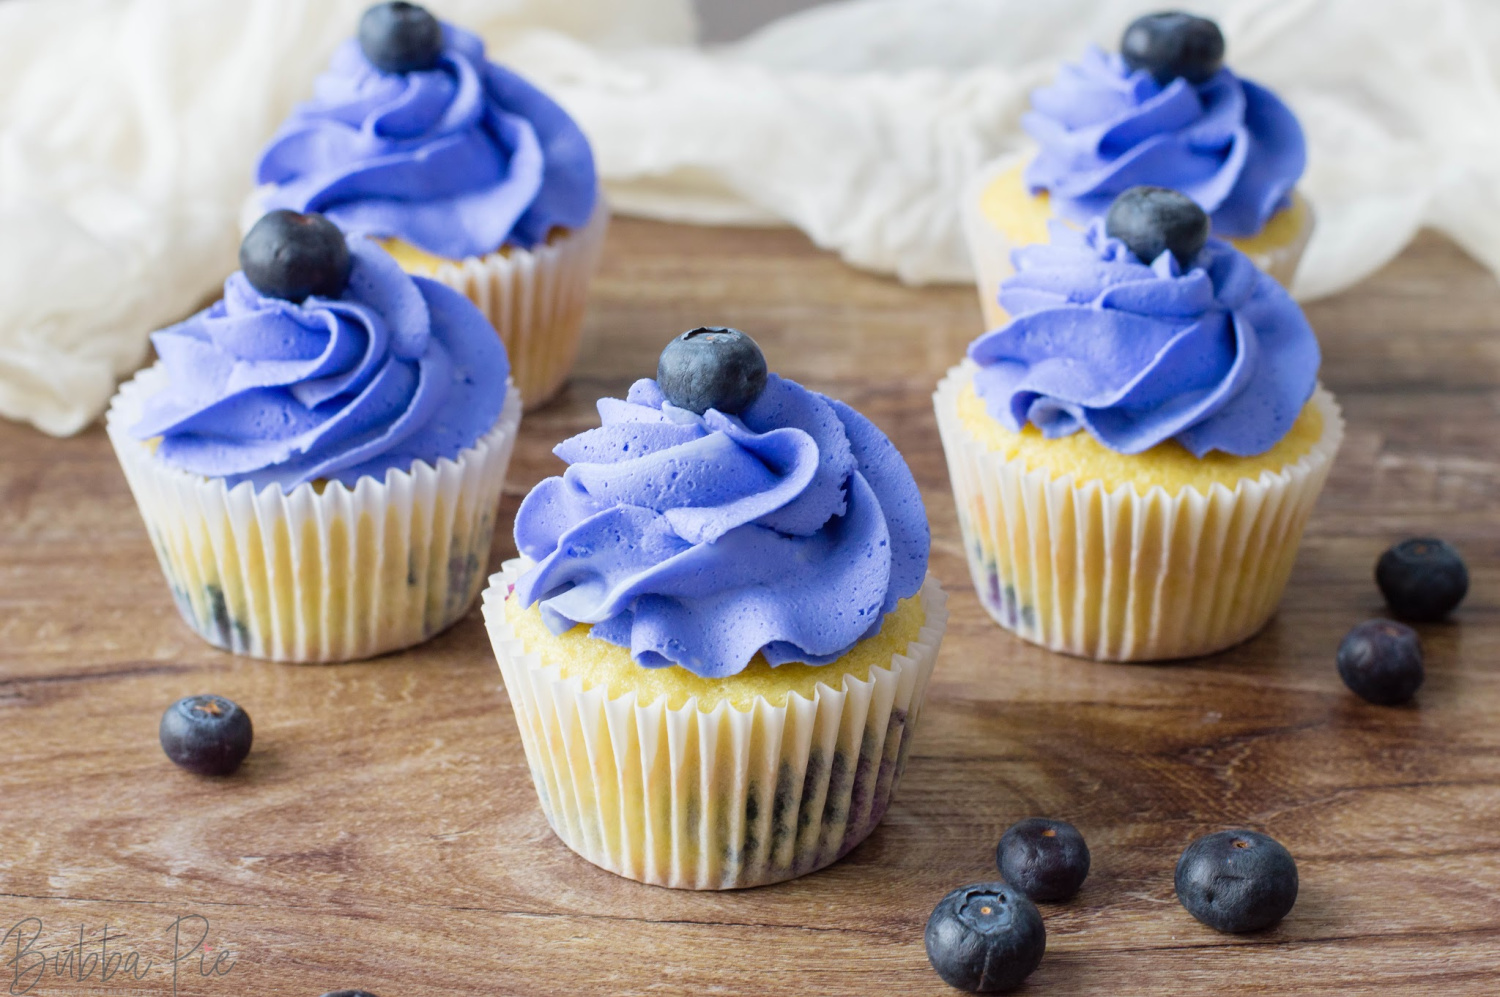 Lemon Blueberry Cupcakes make a great easter dessert